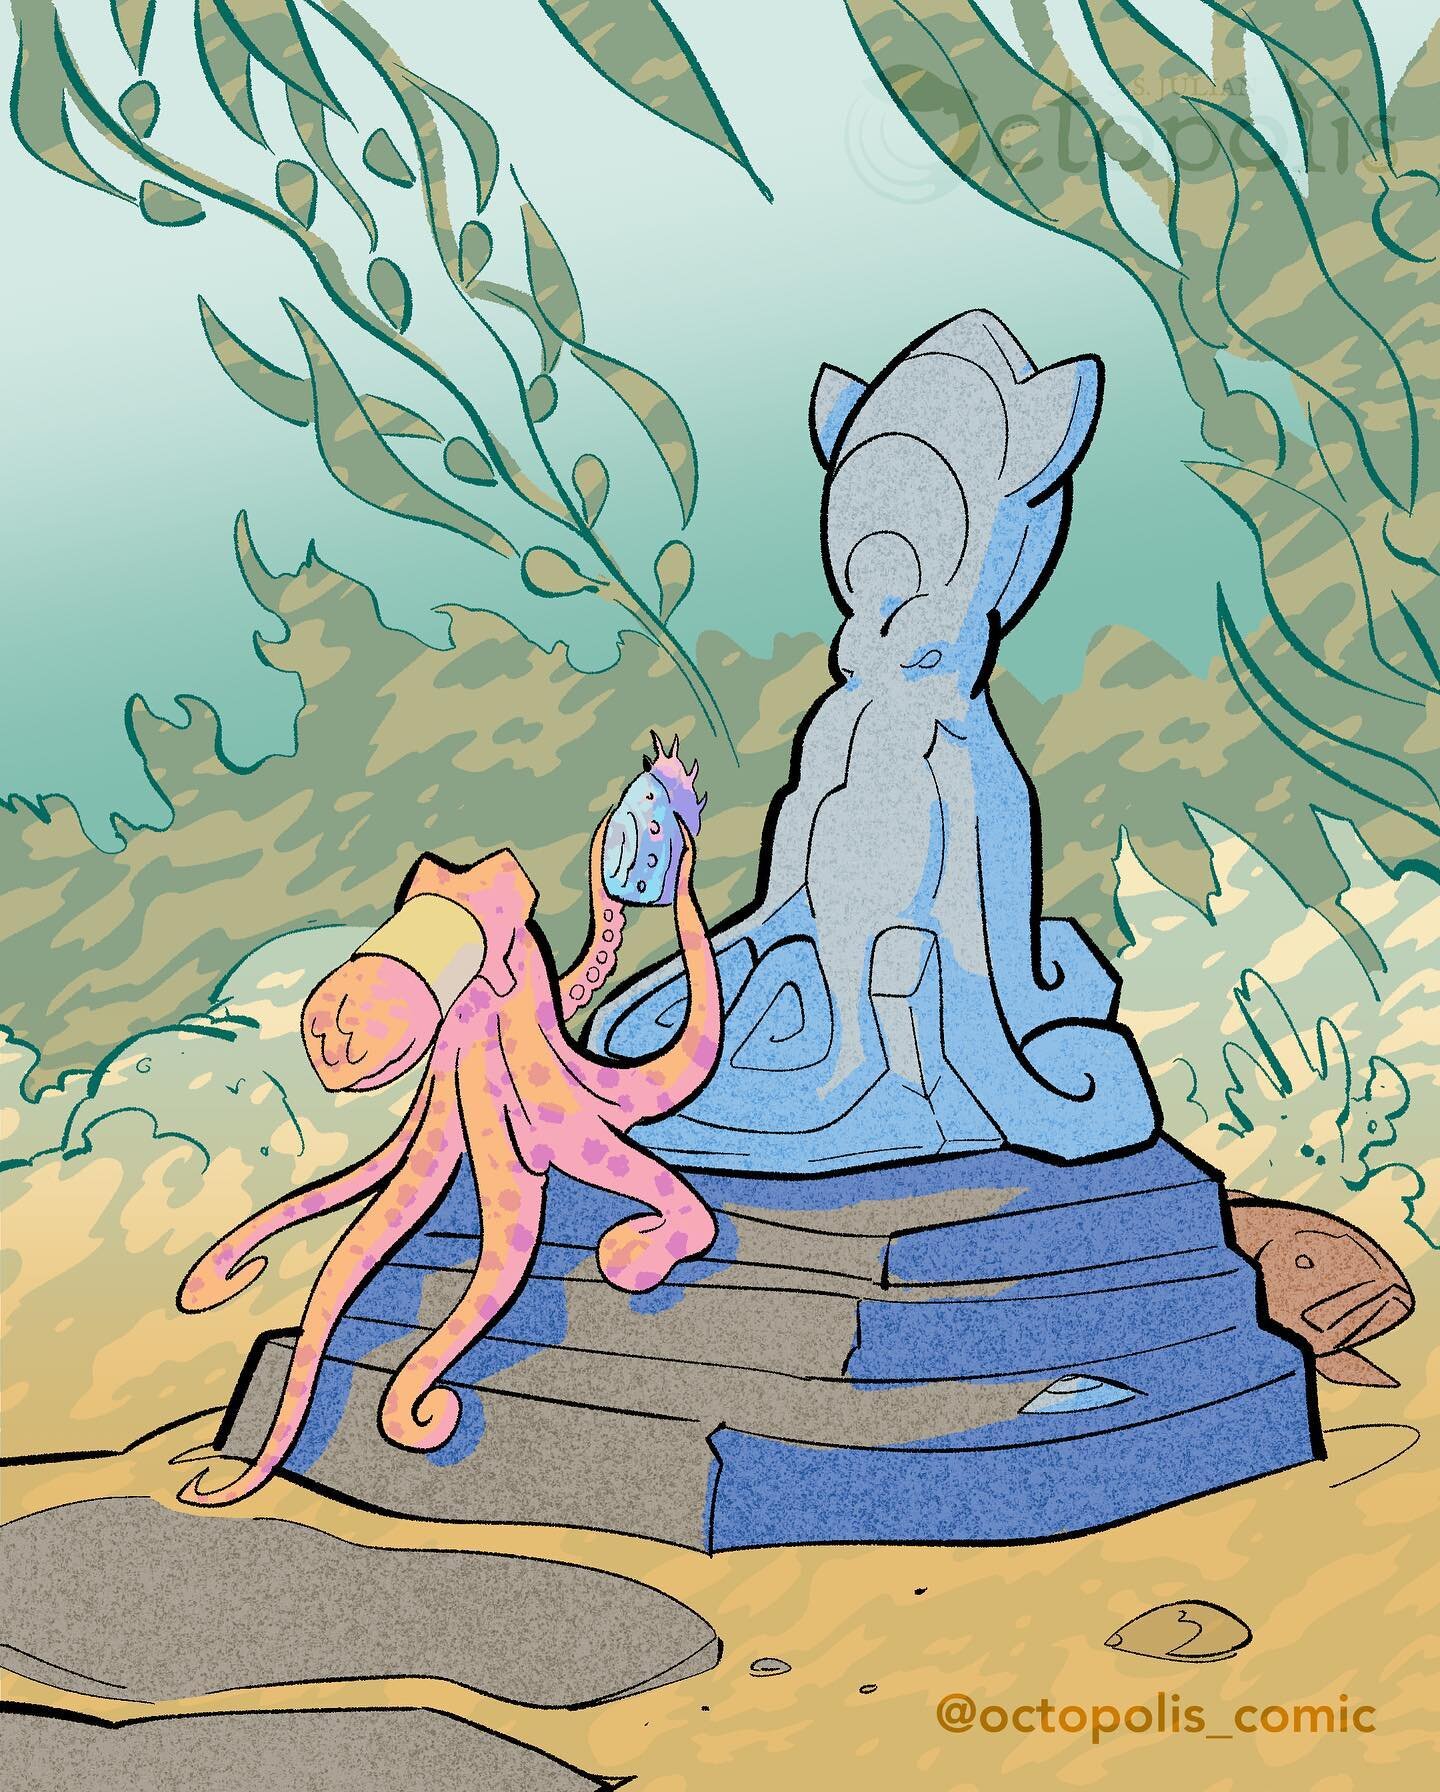 A solstice offering

#octopus #comic #digitalart #palaeoctopus #sacrifice